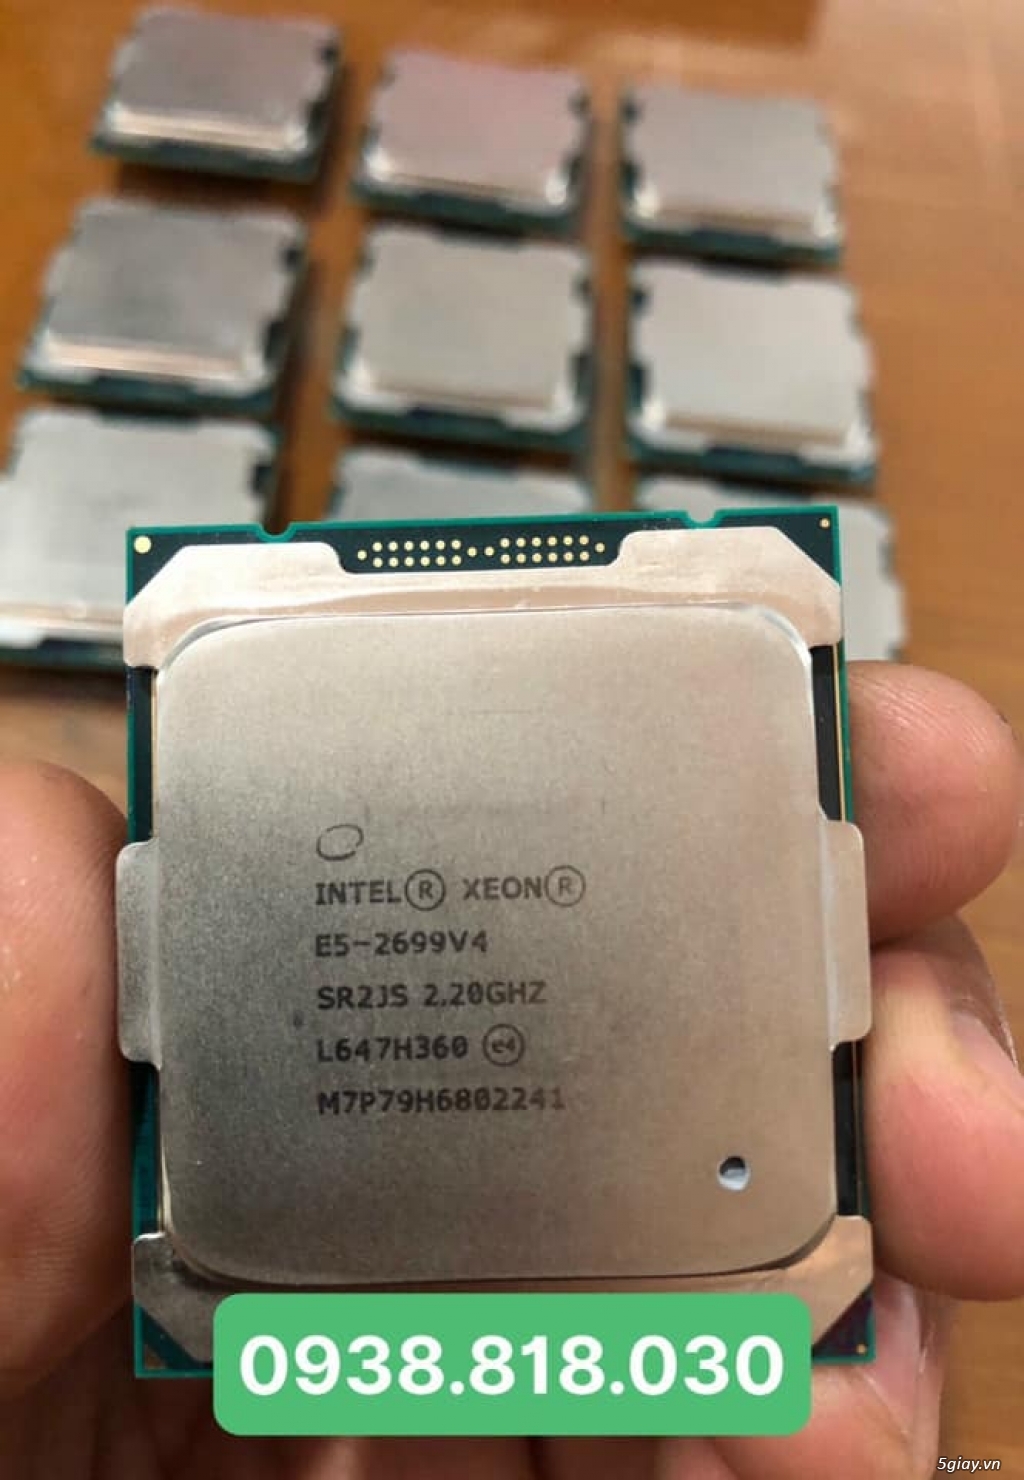 Intel® Xeon® E5-2699 V4  22C/44T 55MB Cache 2.2Ghz Upto 3.6Ghz - 1